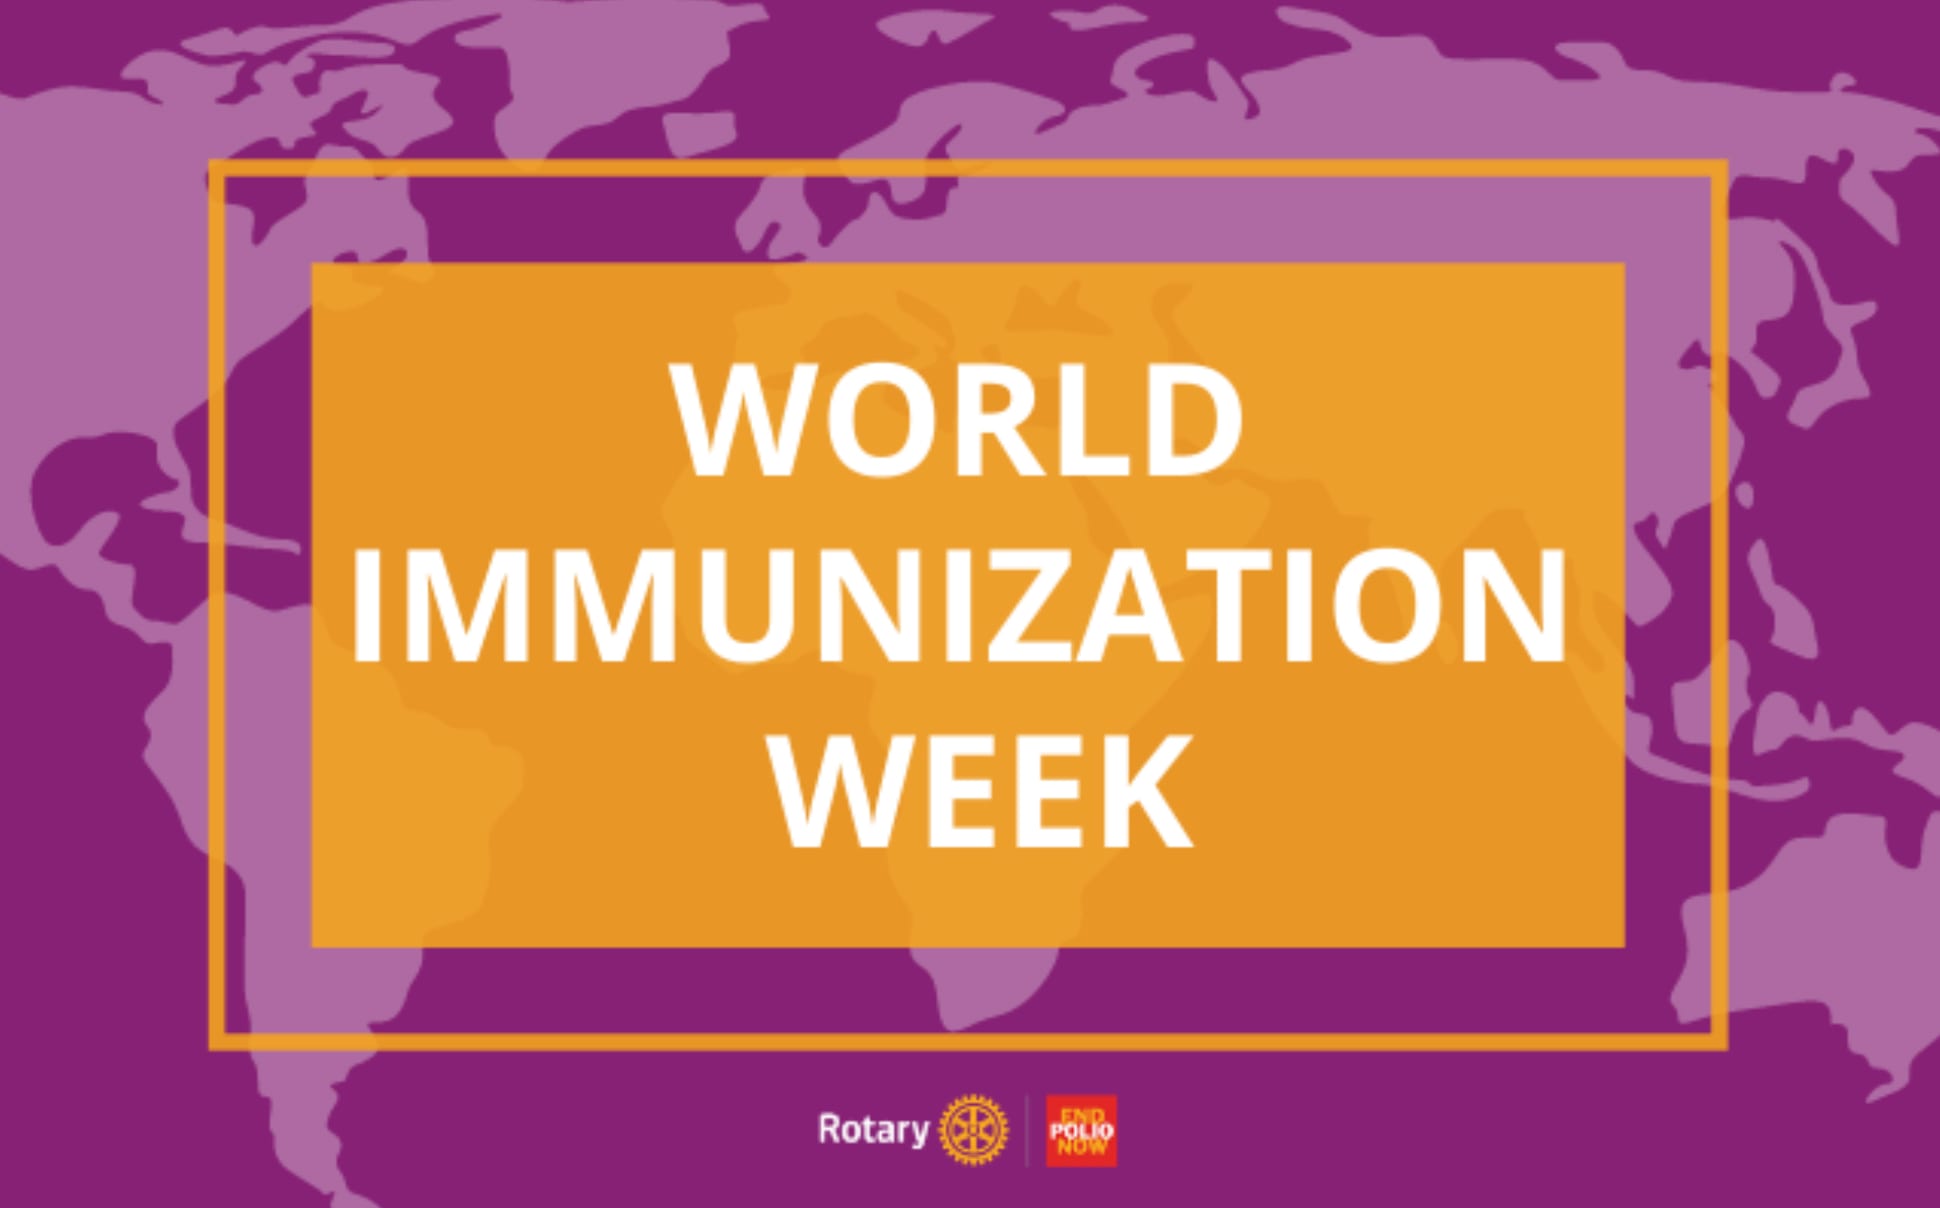 World Immunization Week is 24-30 April